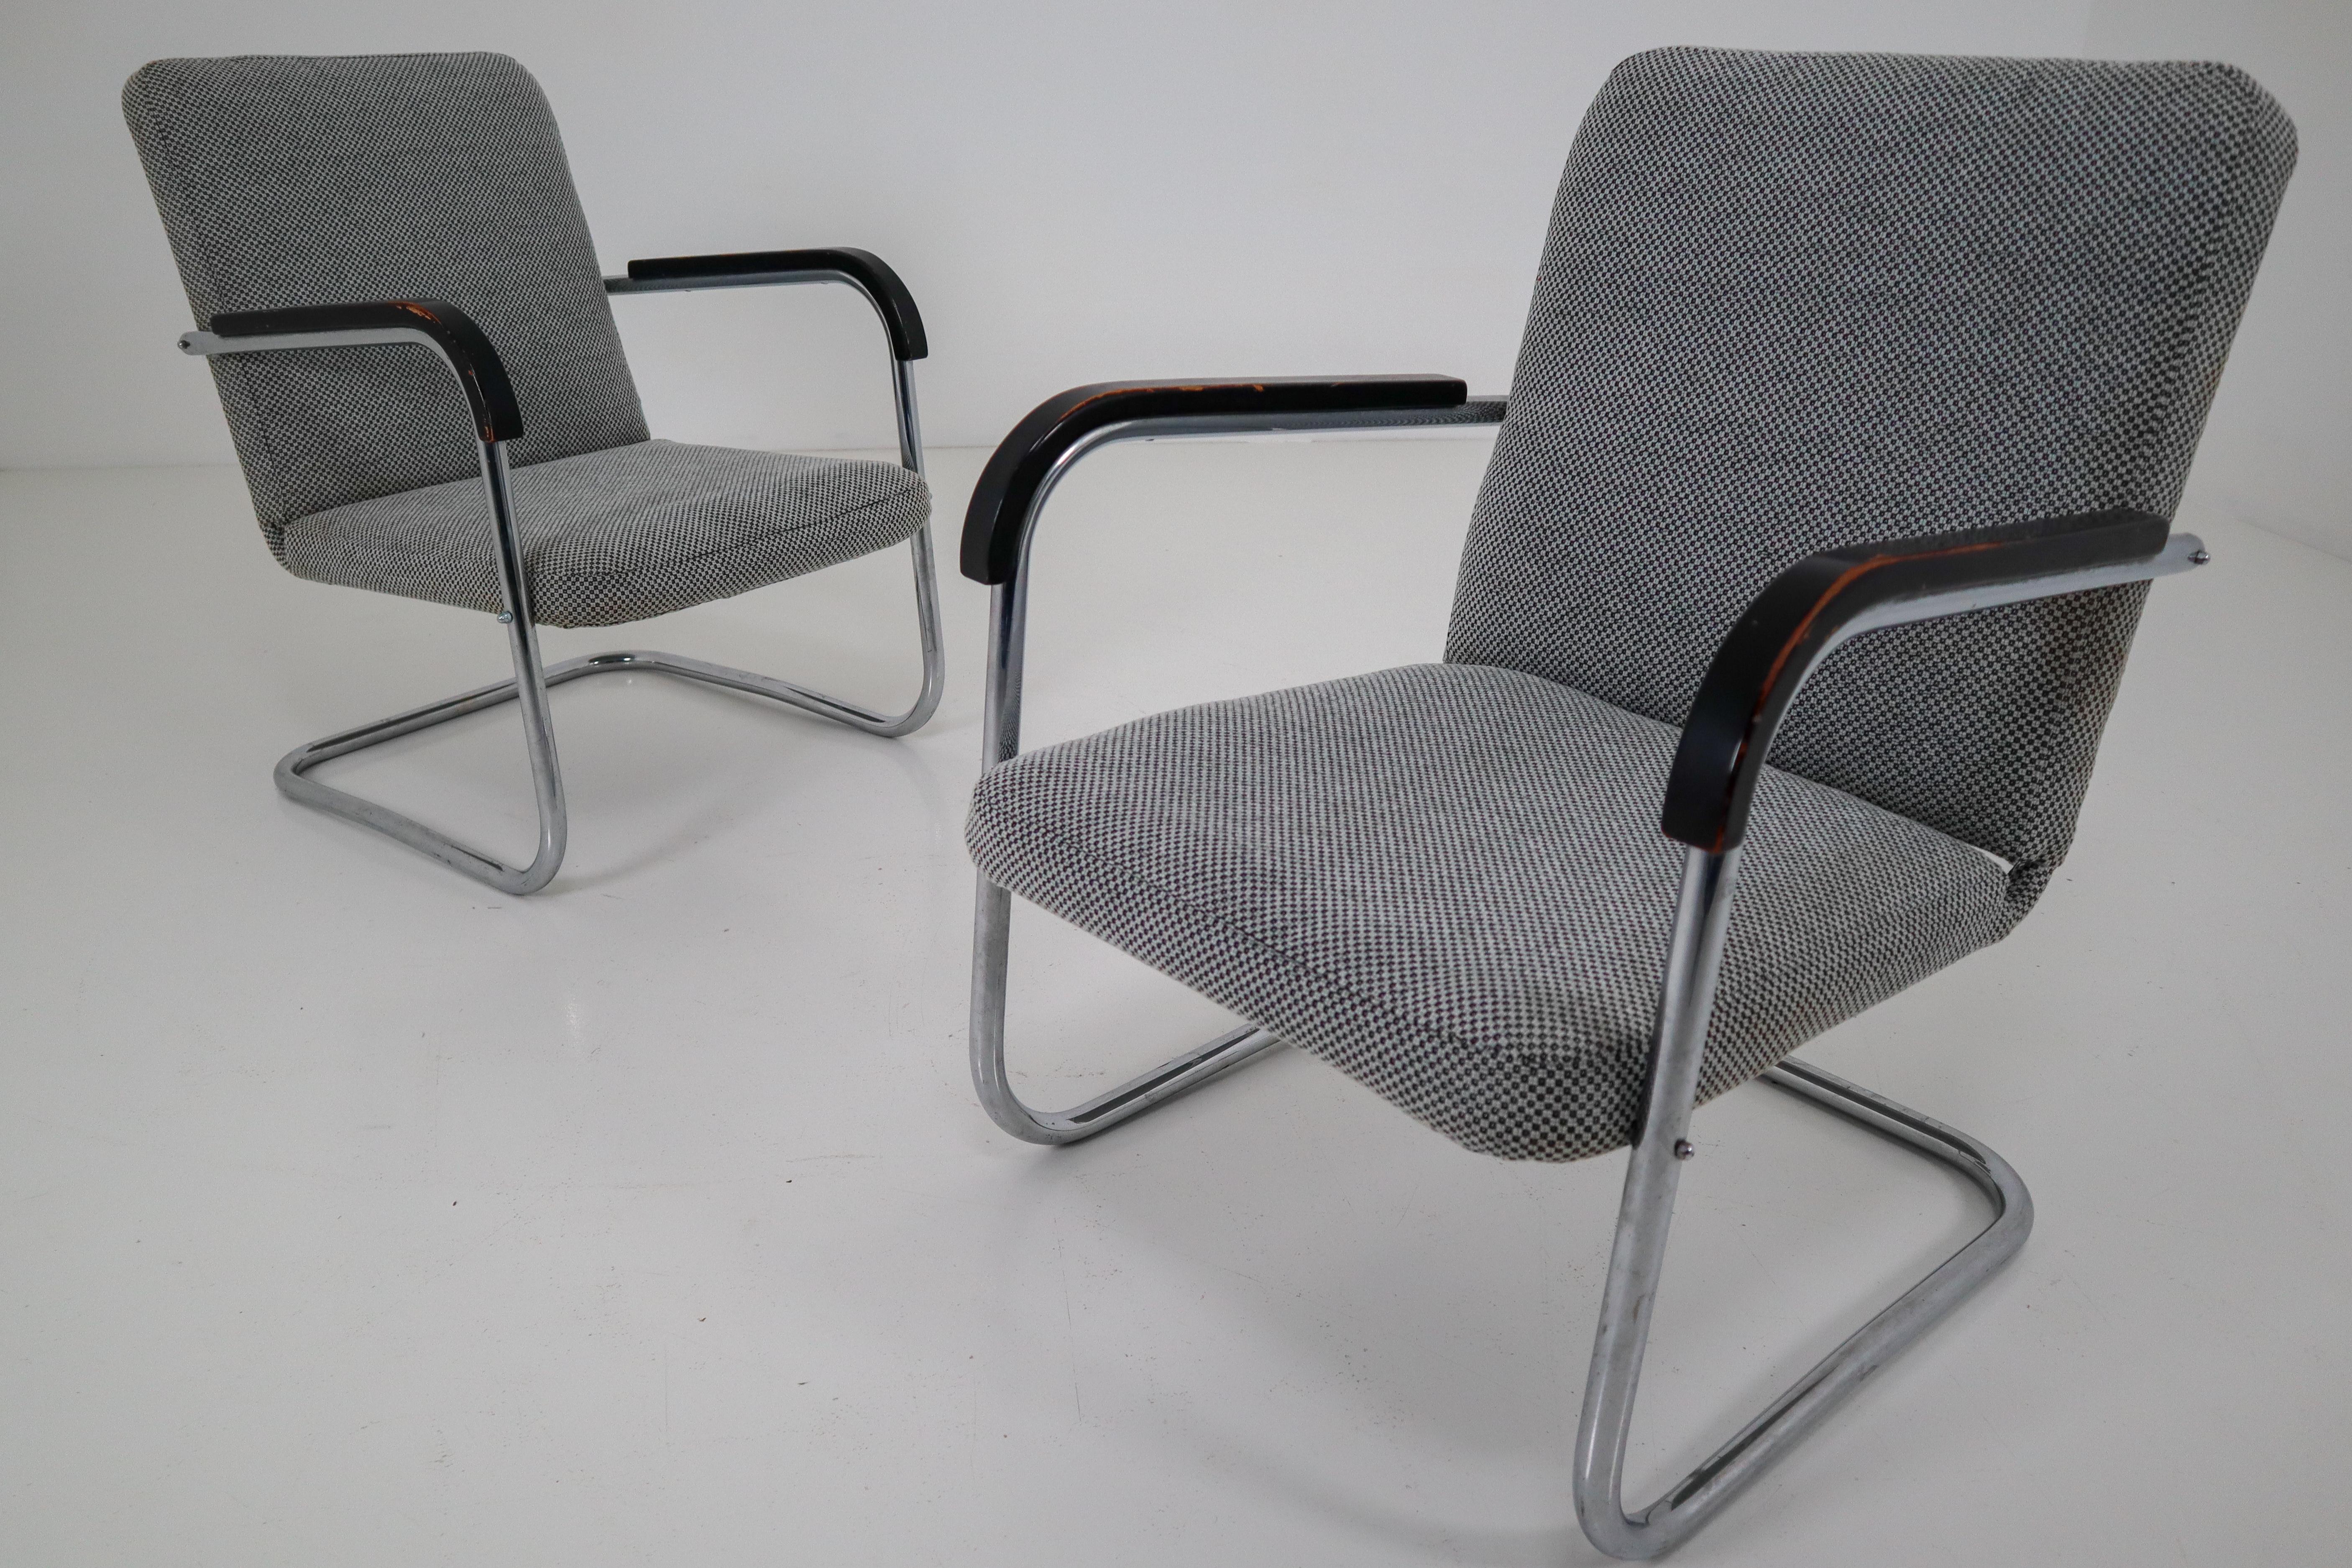 Pair of Chrome Steel Armchairs by Thonet circa 1930s Midcentury Bauhaus Period 3